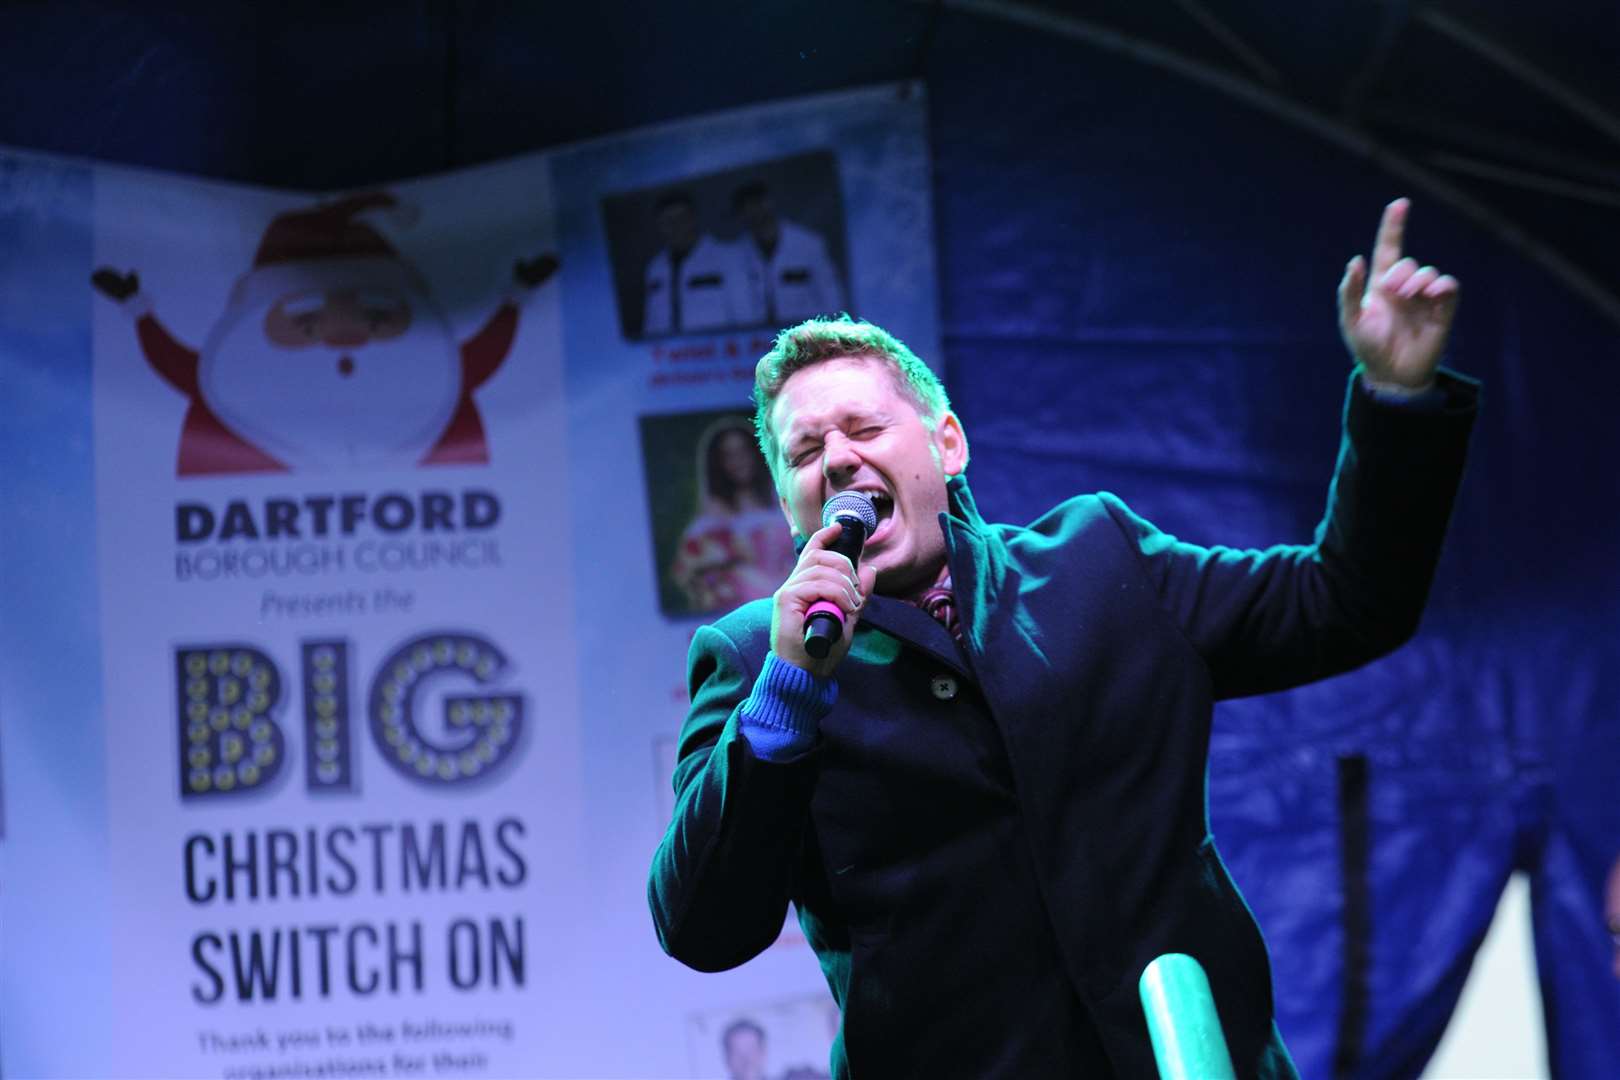 David Ribi performing. Picture: Dartford Borough Council